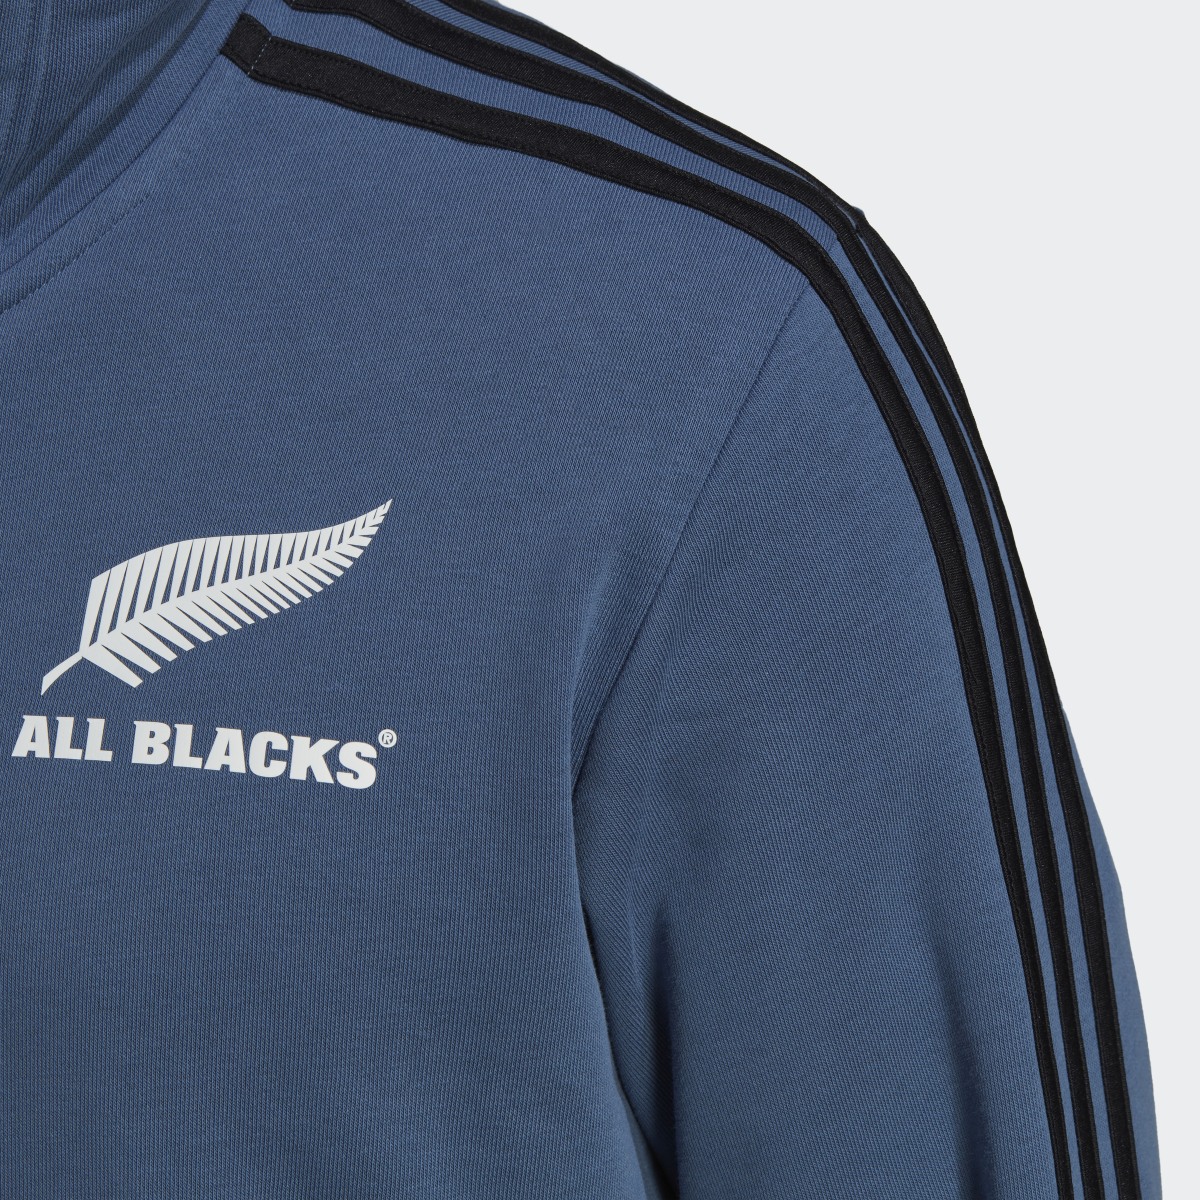 Adidas All Blacks Rugby 3-Stripes Hoodie. 8